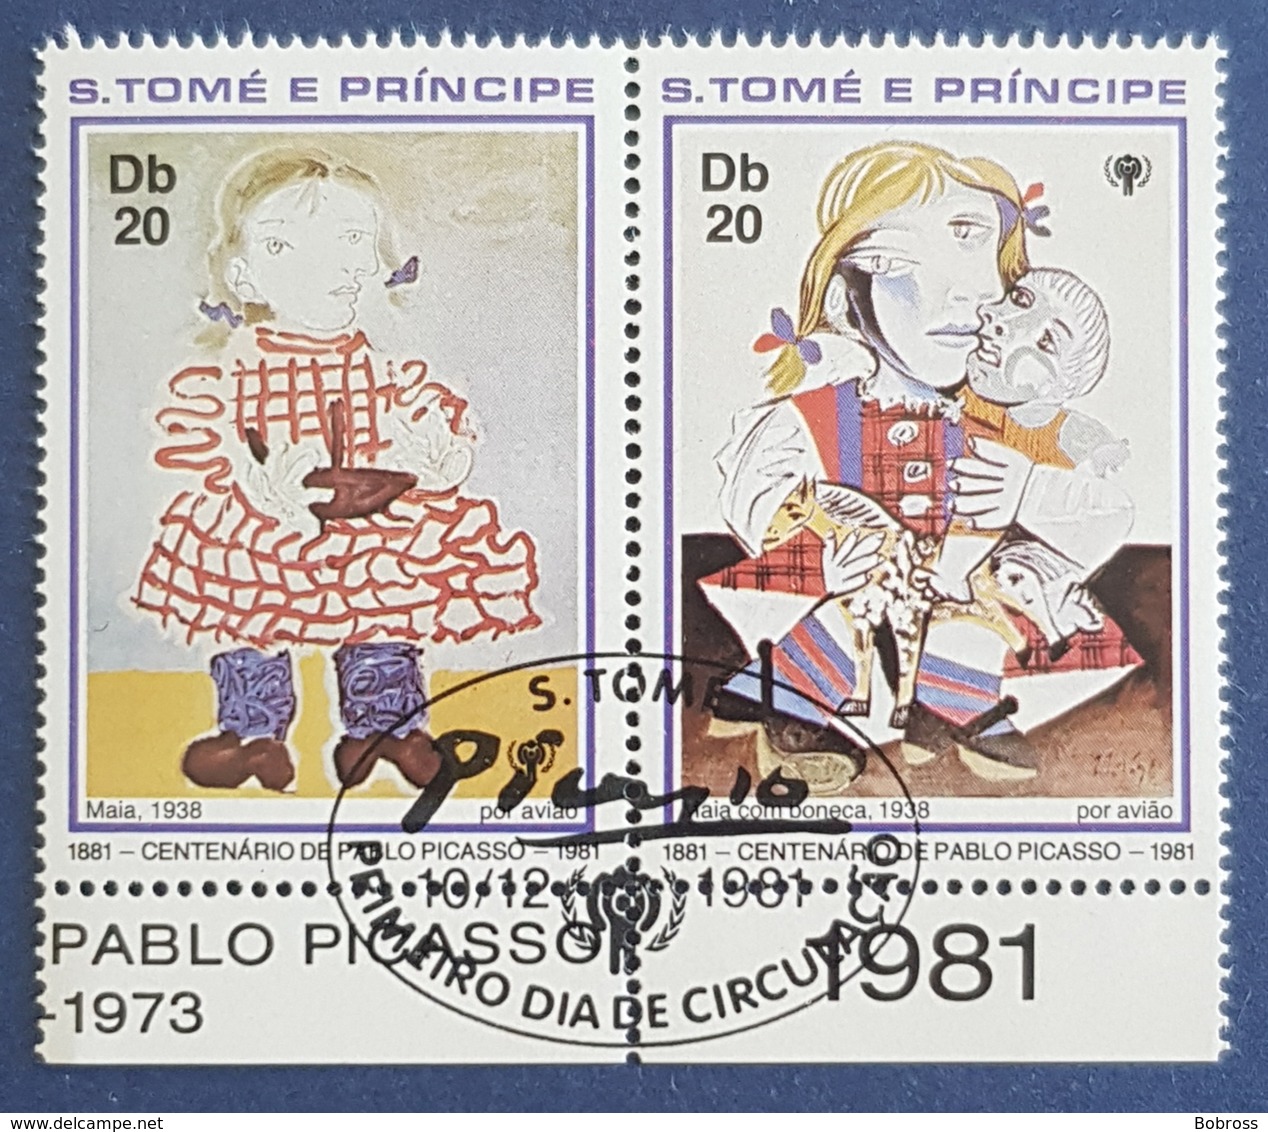 S.Tome E Principe , 1981 , The 100th Anniversary Of The Birth Of Pablo Picasso And  International Year Of The Child - Sao Tome Et Principe